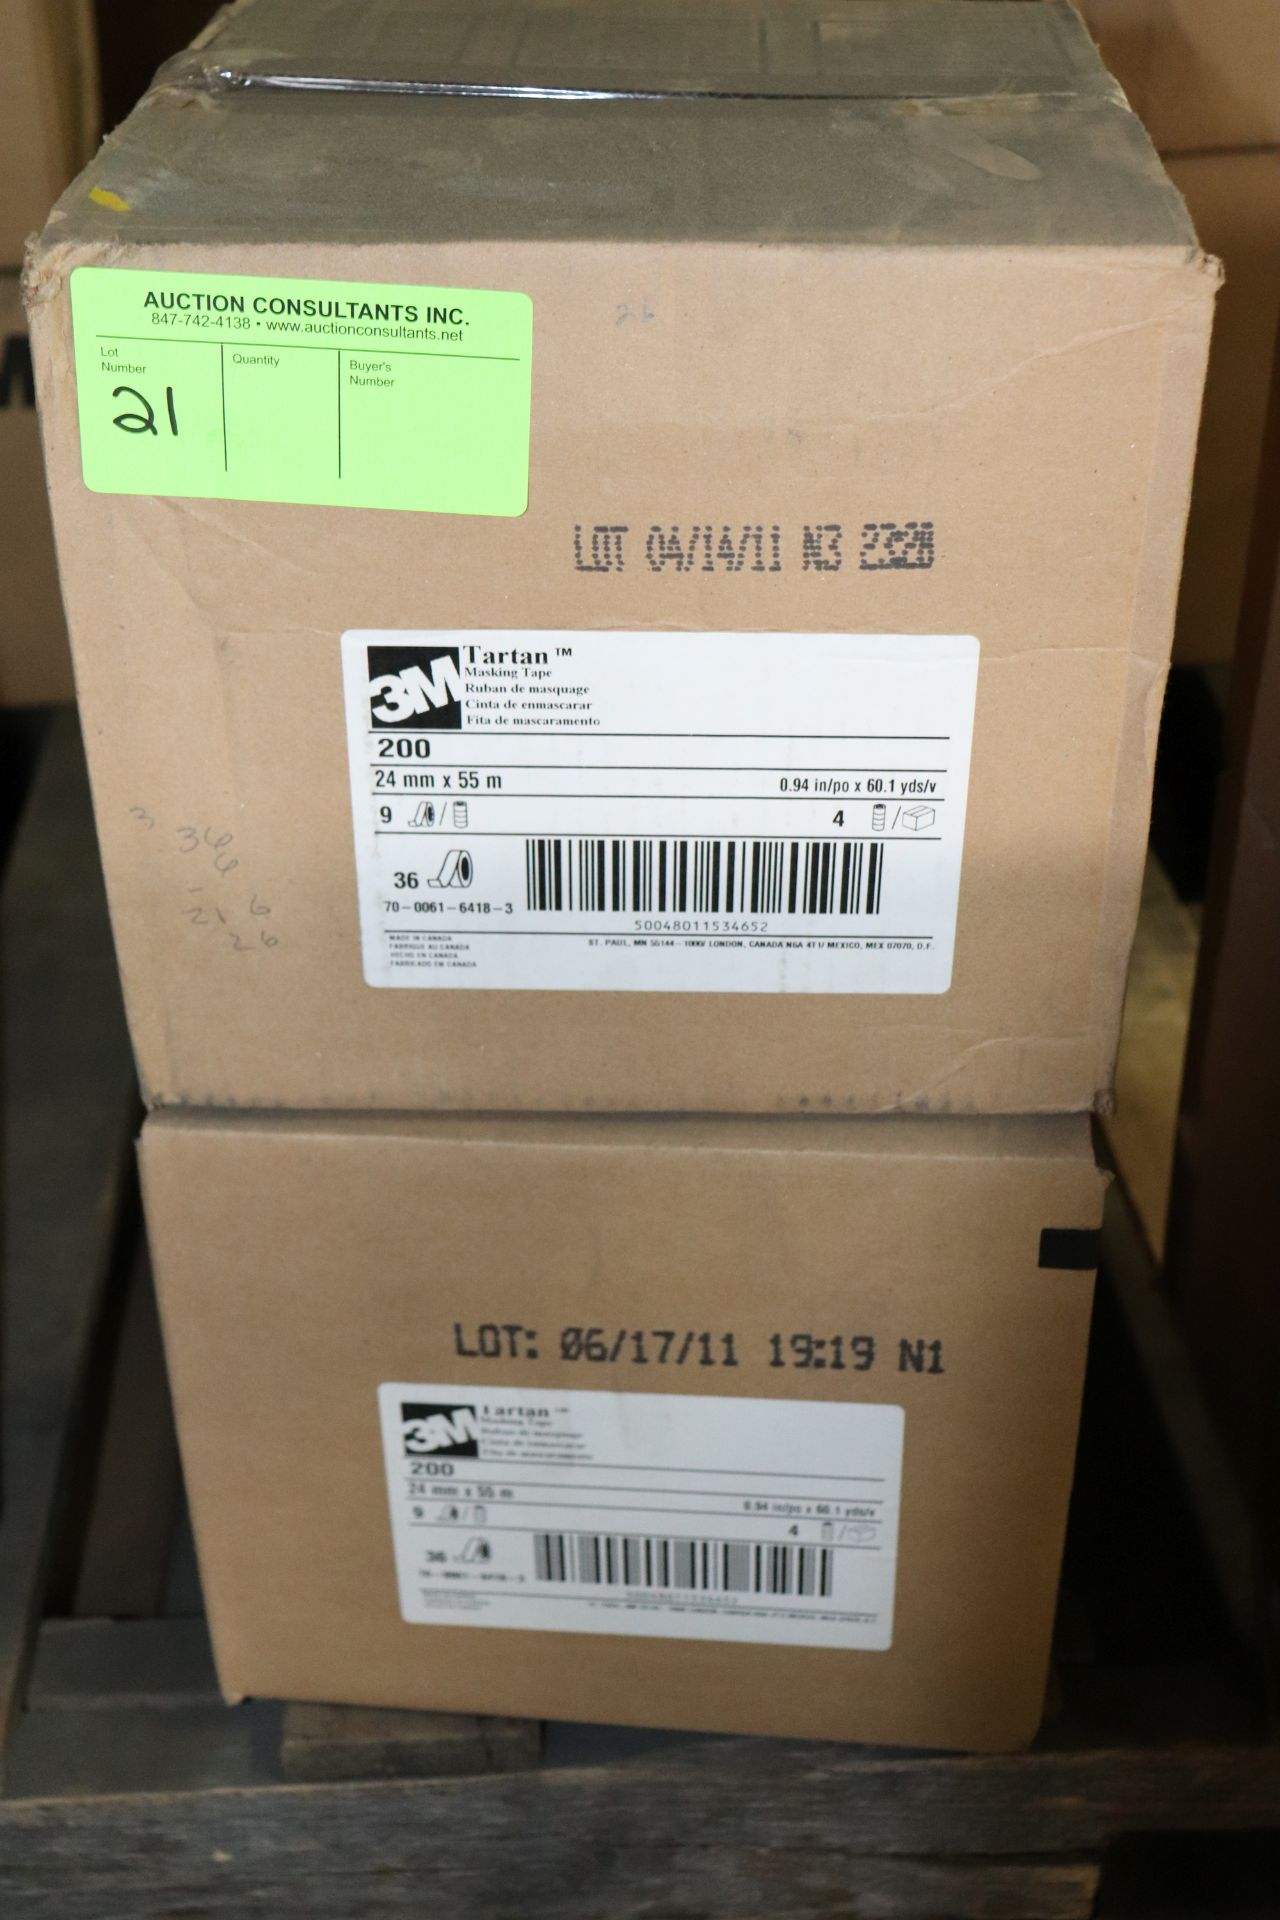 Two cases of 3M Tartan brand masking tape, 24mm x 55m